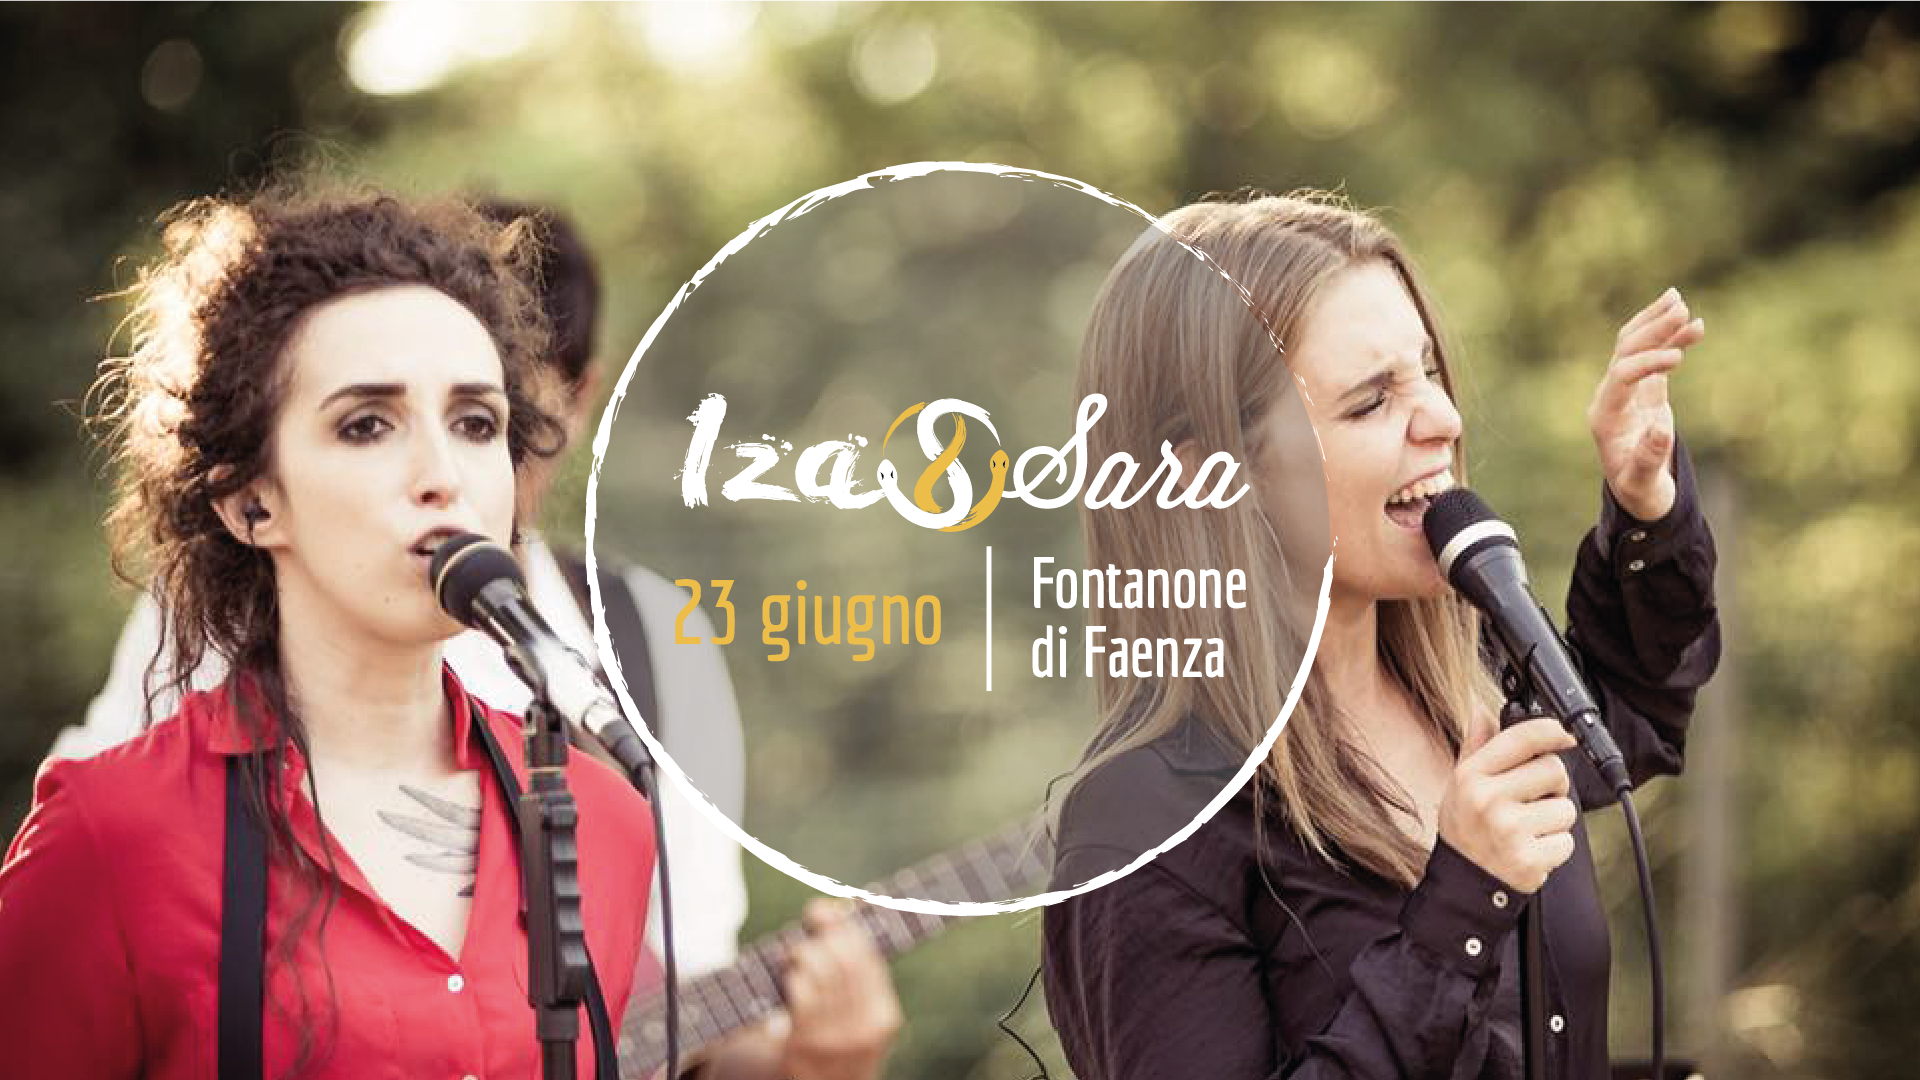 Iza&Sara #LIVE @IlFontanone (Faenza)